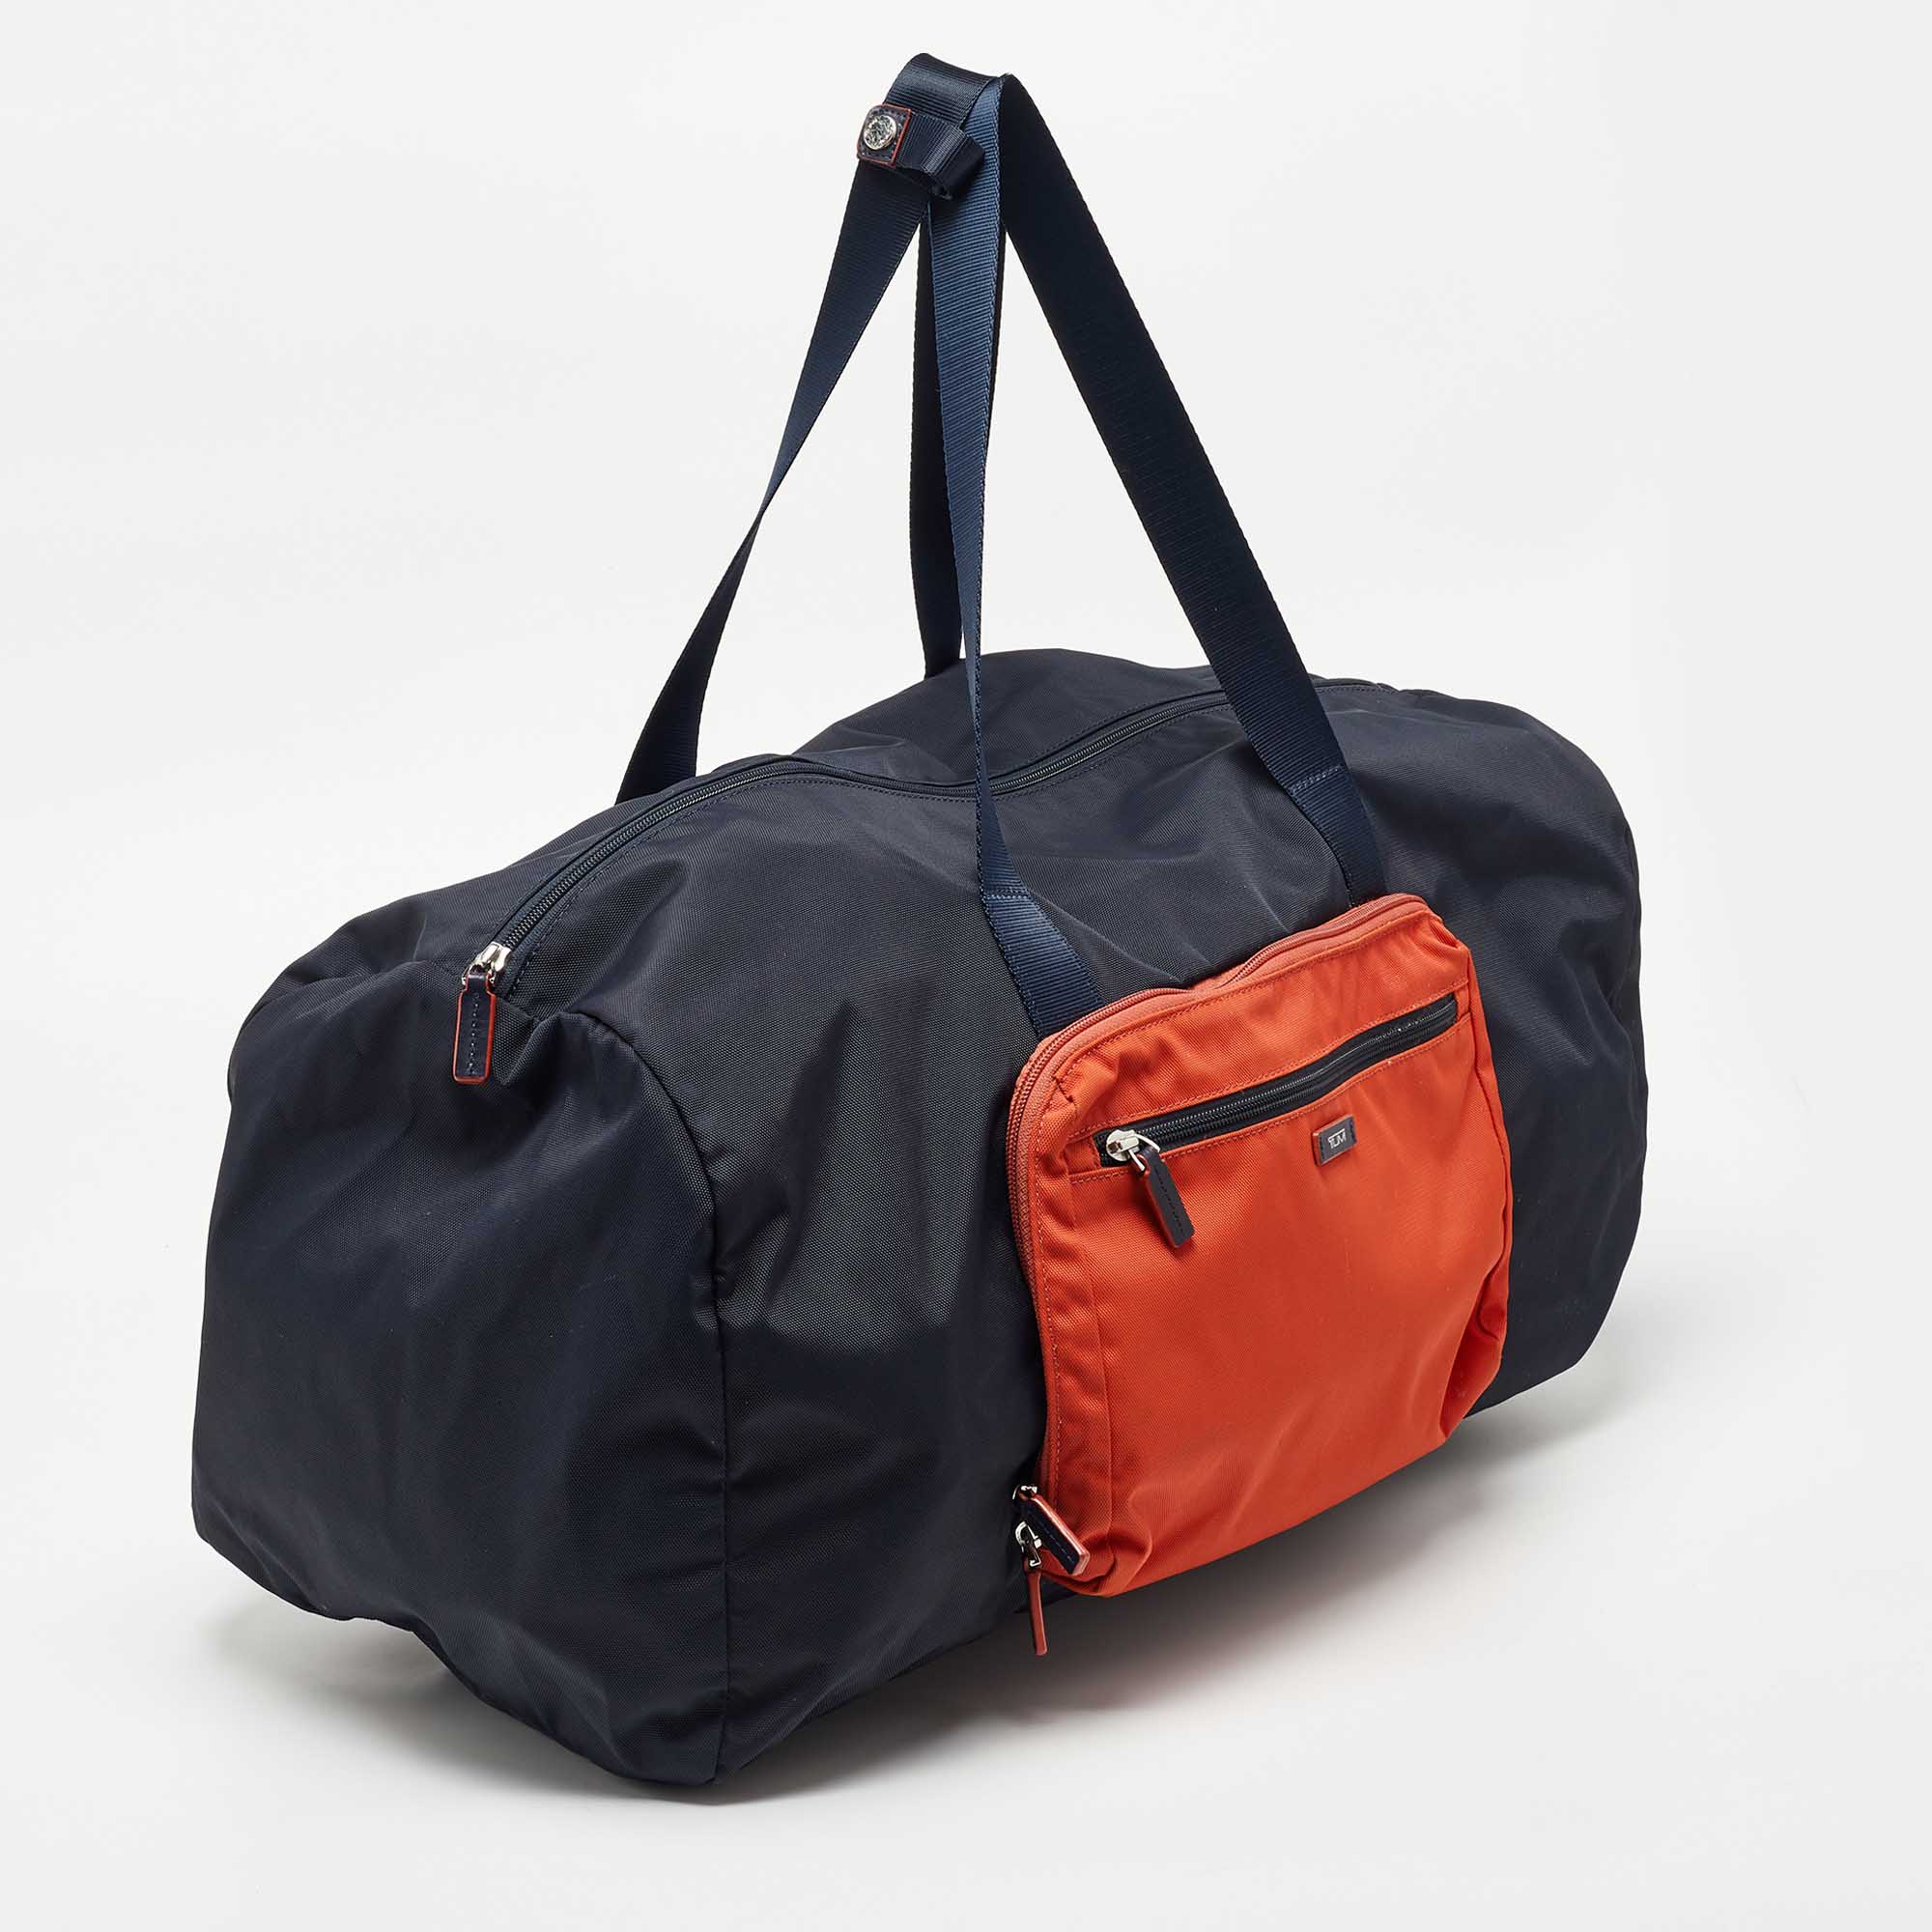 TUMI Navy Blue/Orange Nylon Foldable Compact Duffle Bag